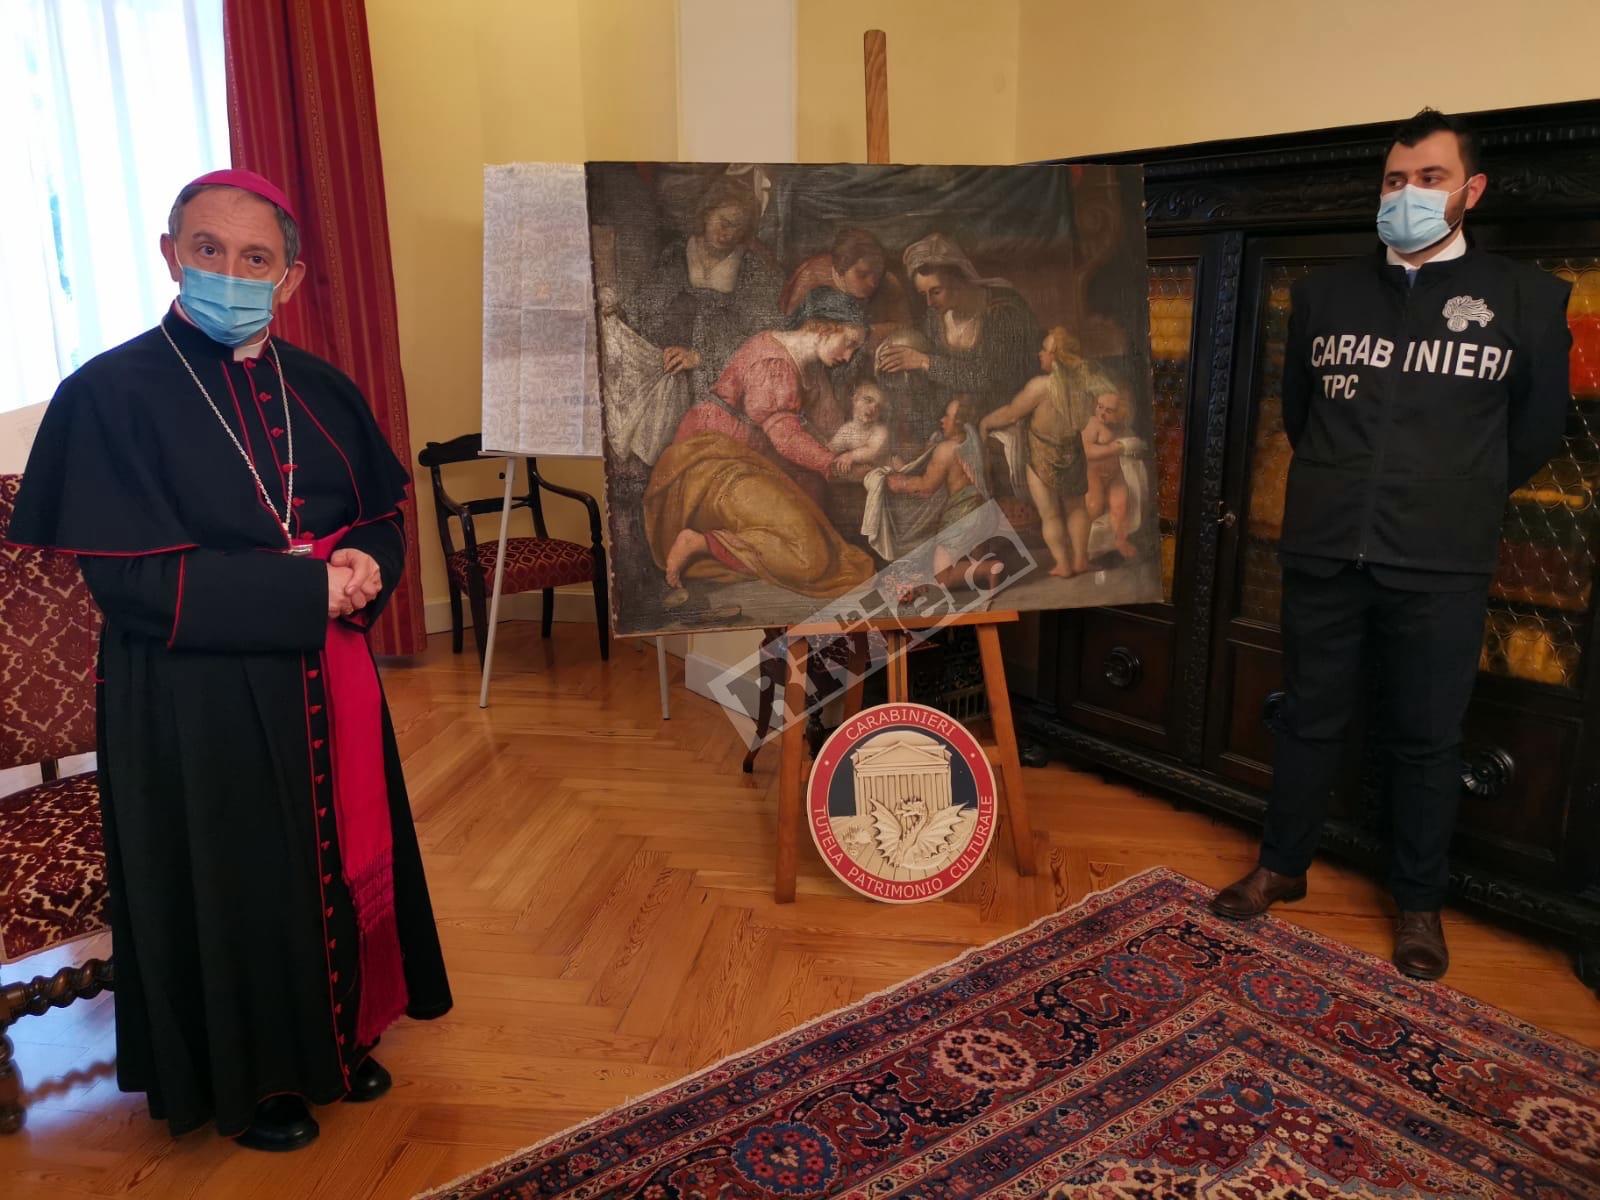 Diocesi Pala d'altare Madonna vescovo Suetta carabinieri_05